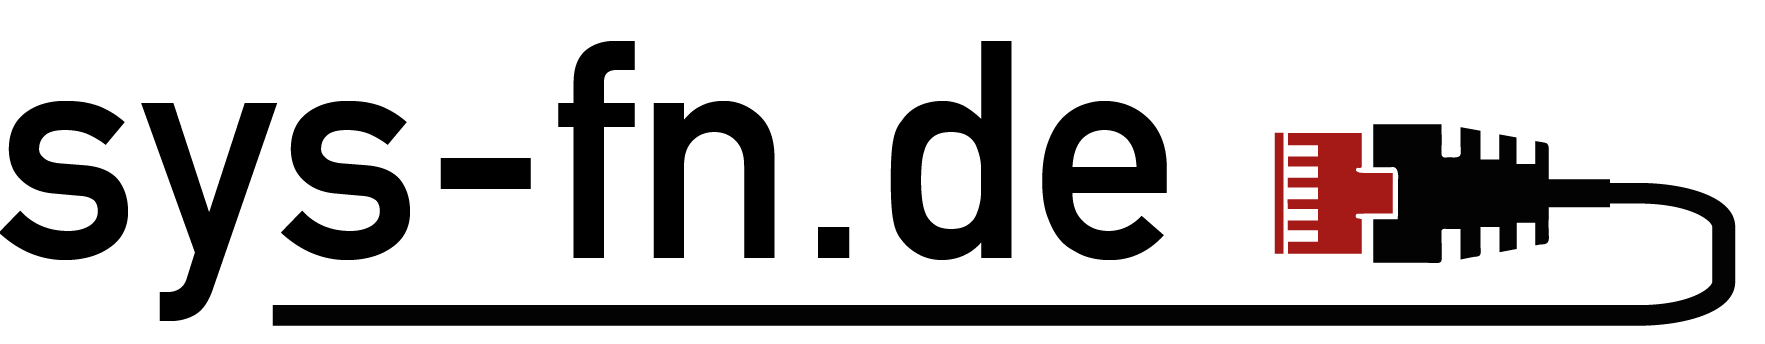 Logo sys fn